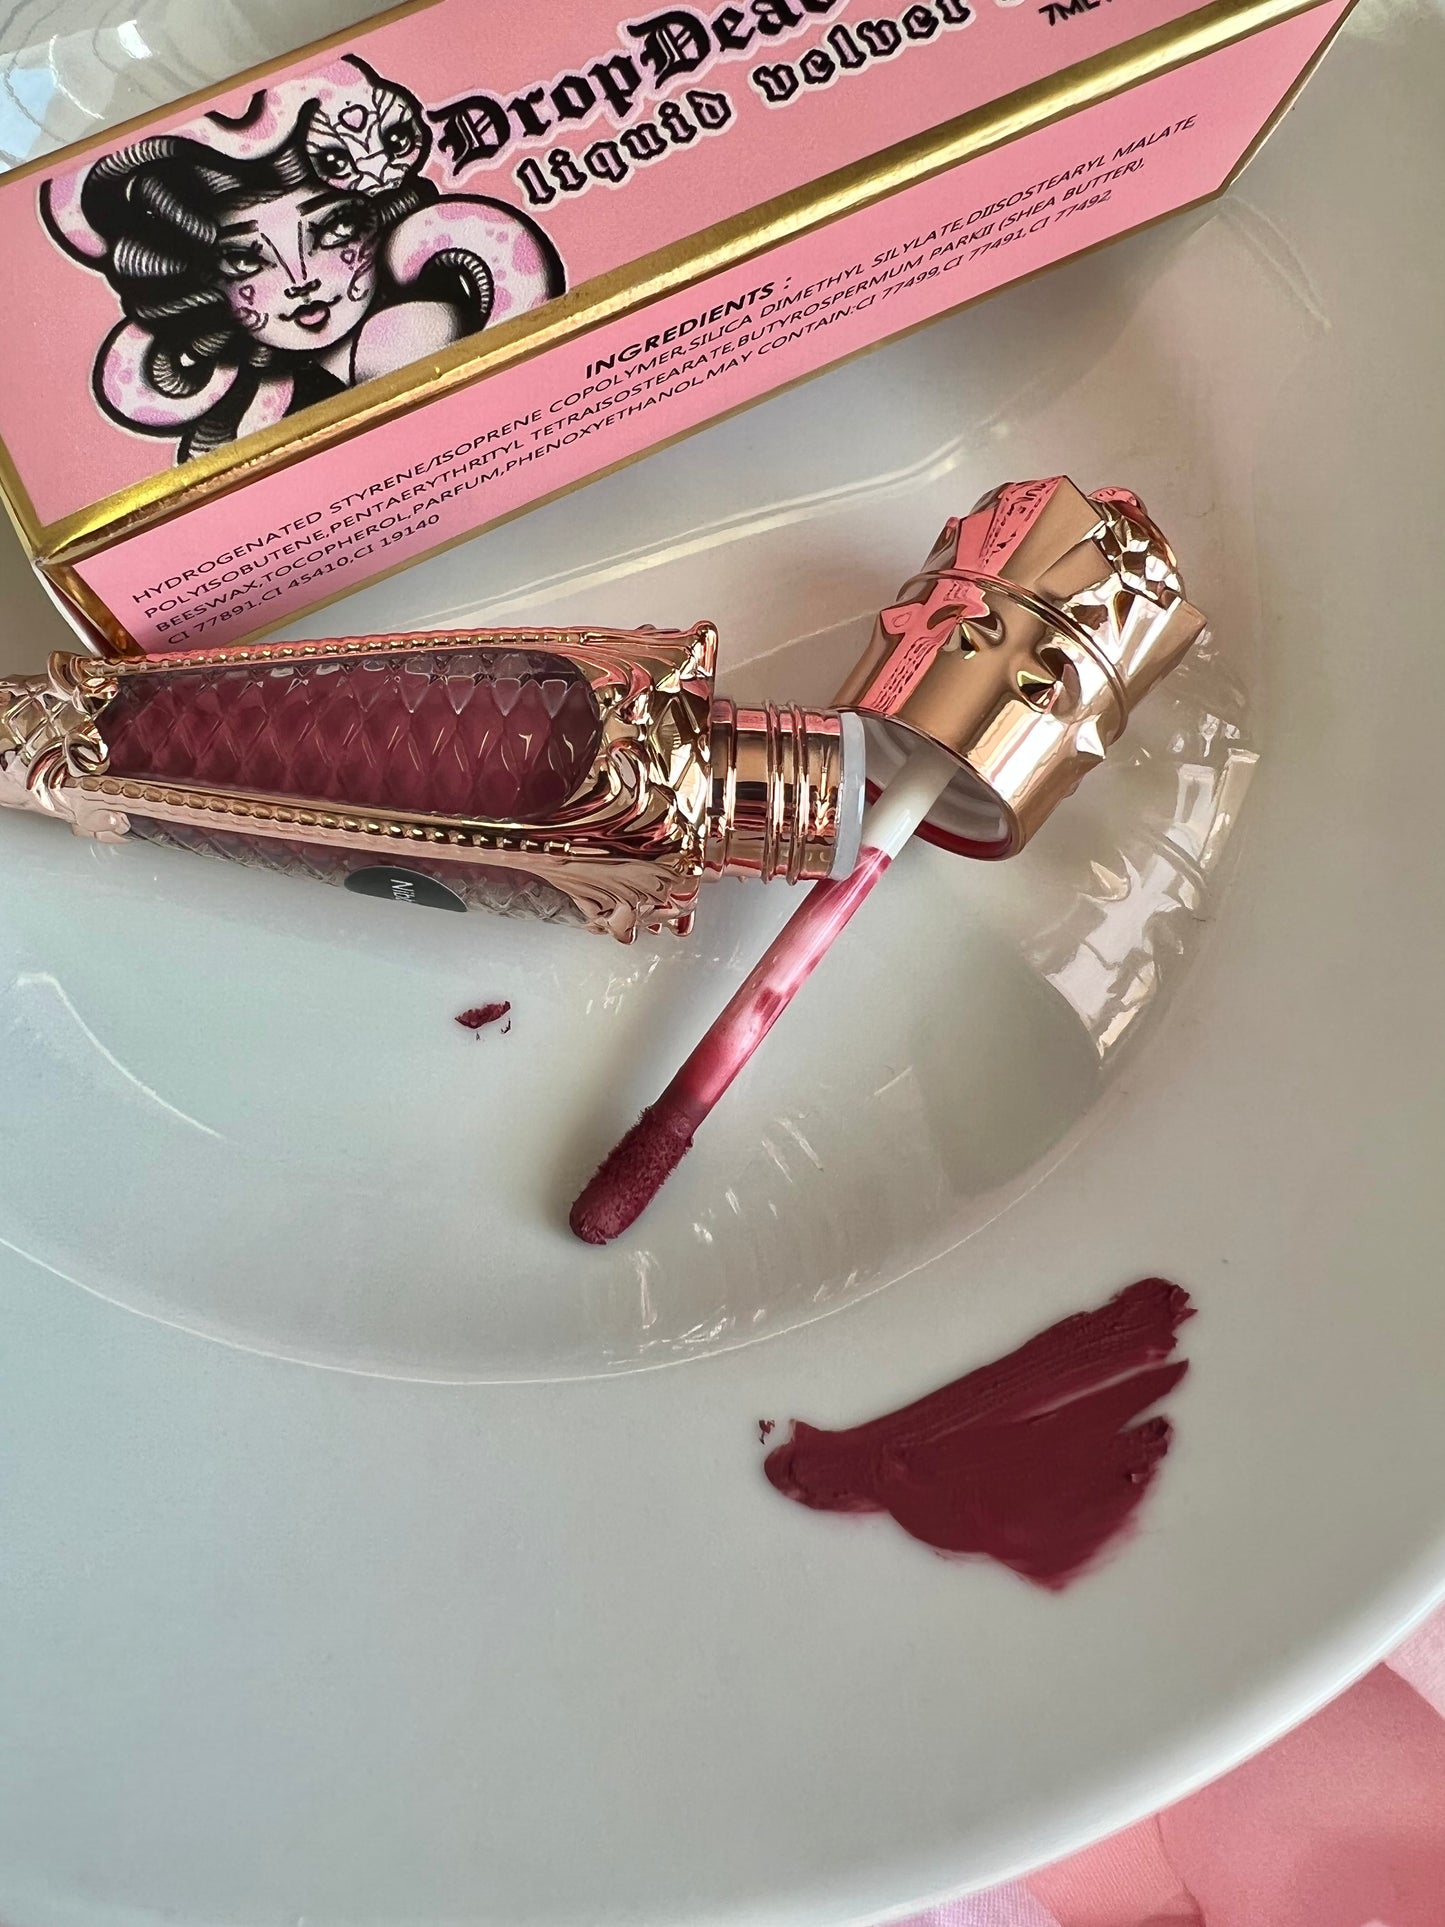 NIBBLE - Liquid luxe Velvet lipstick